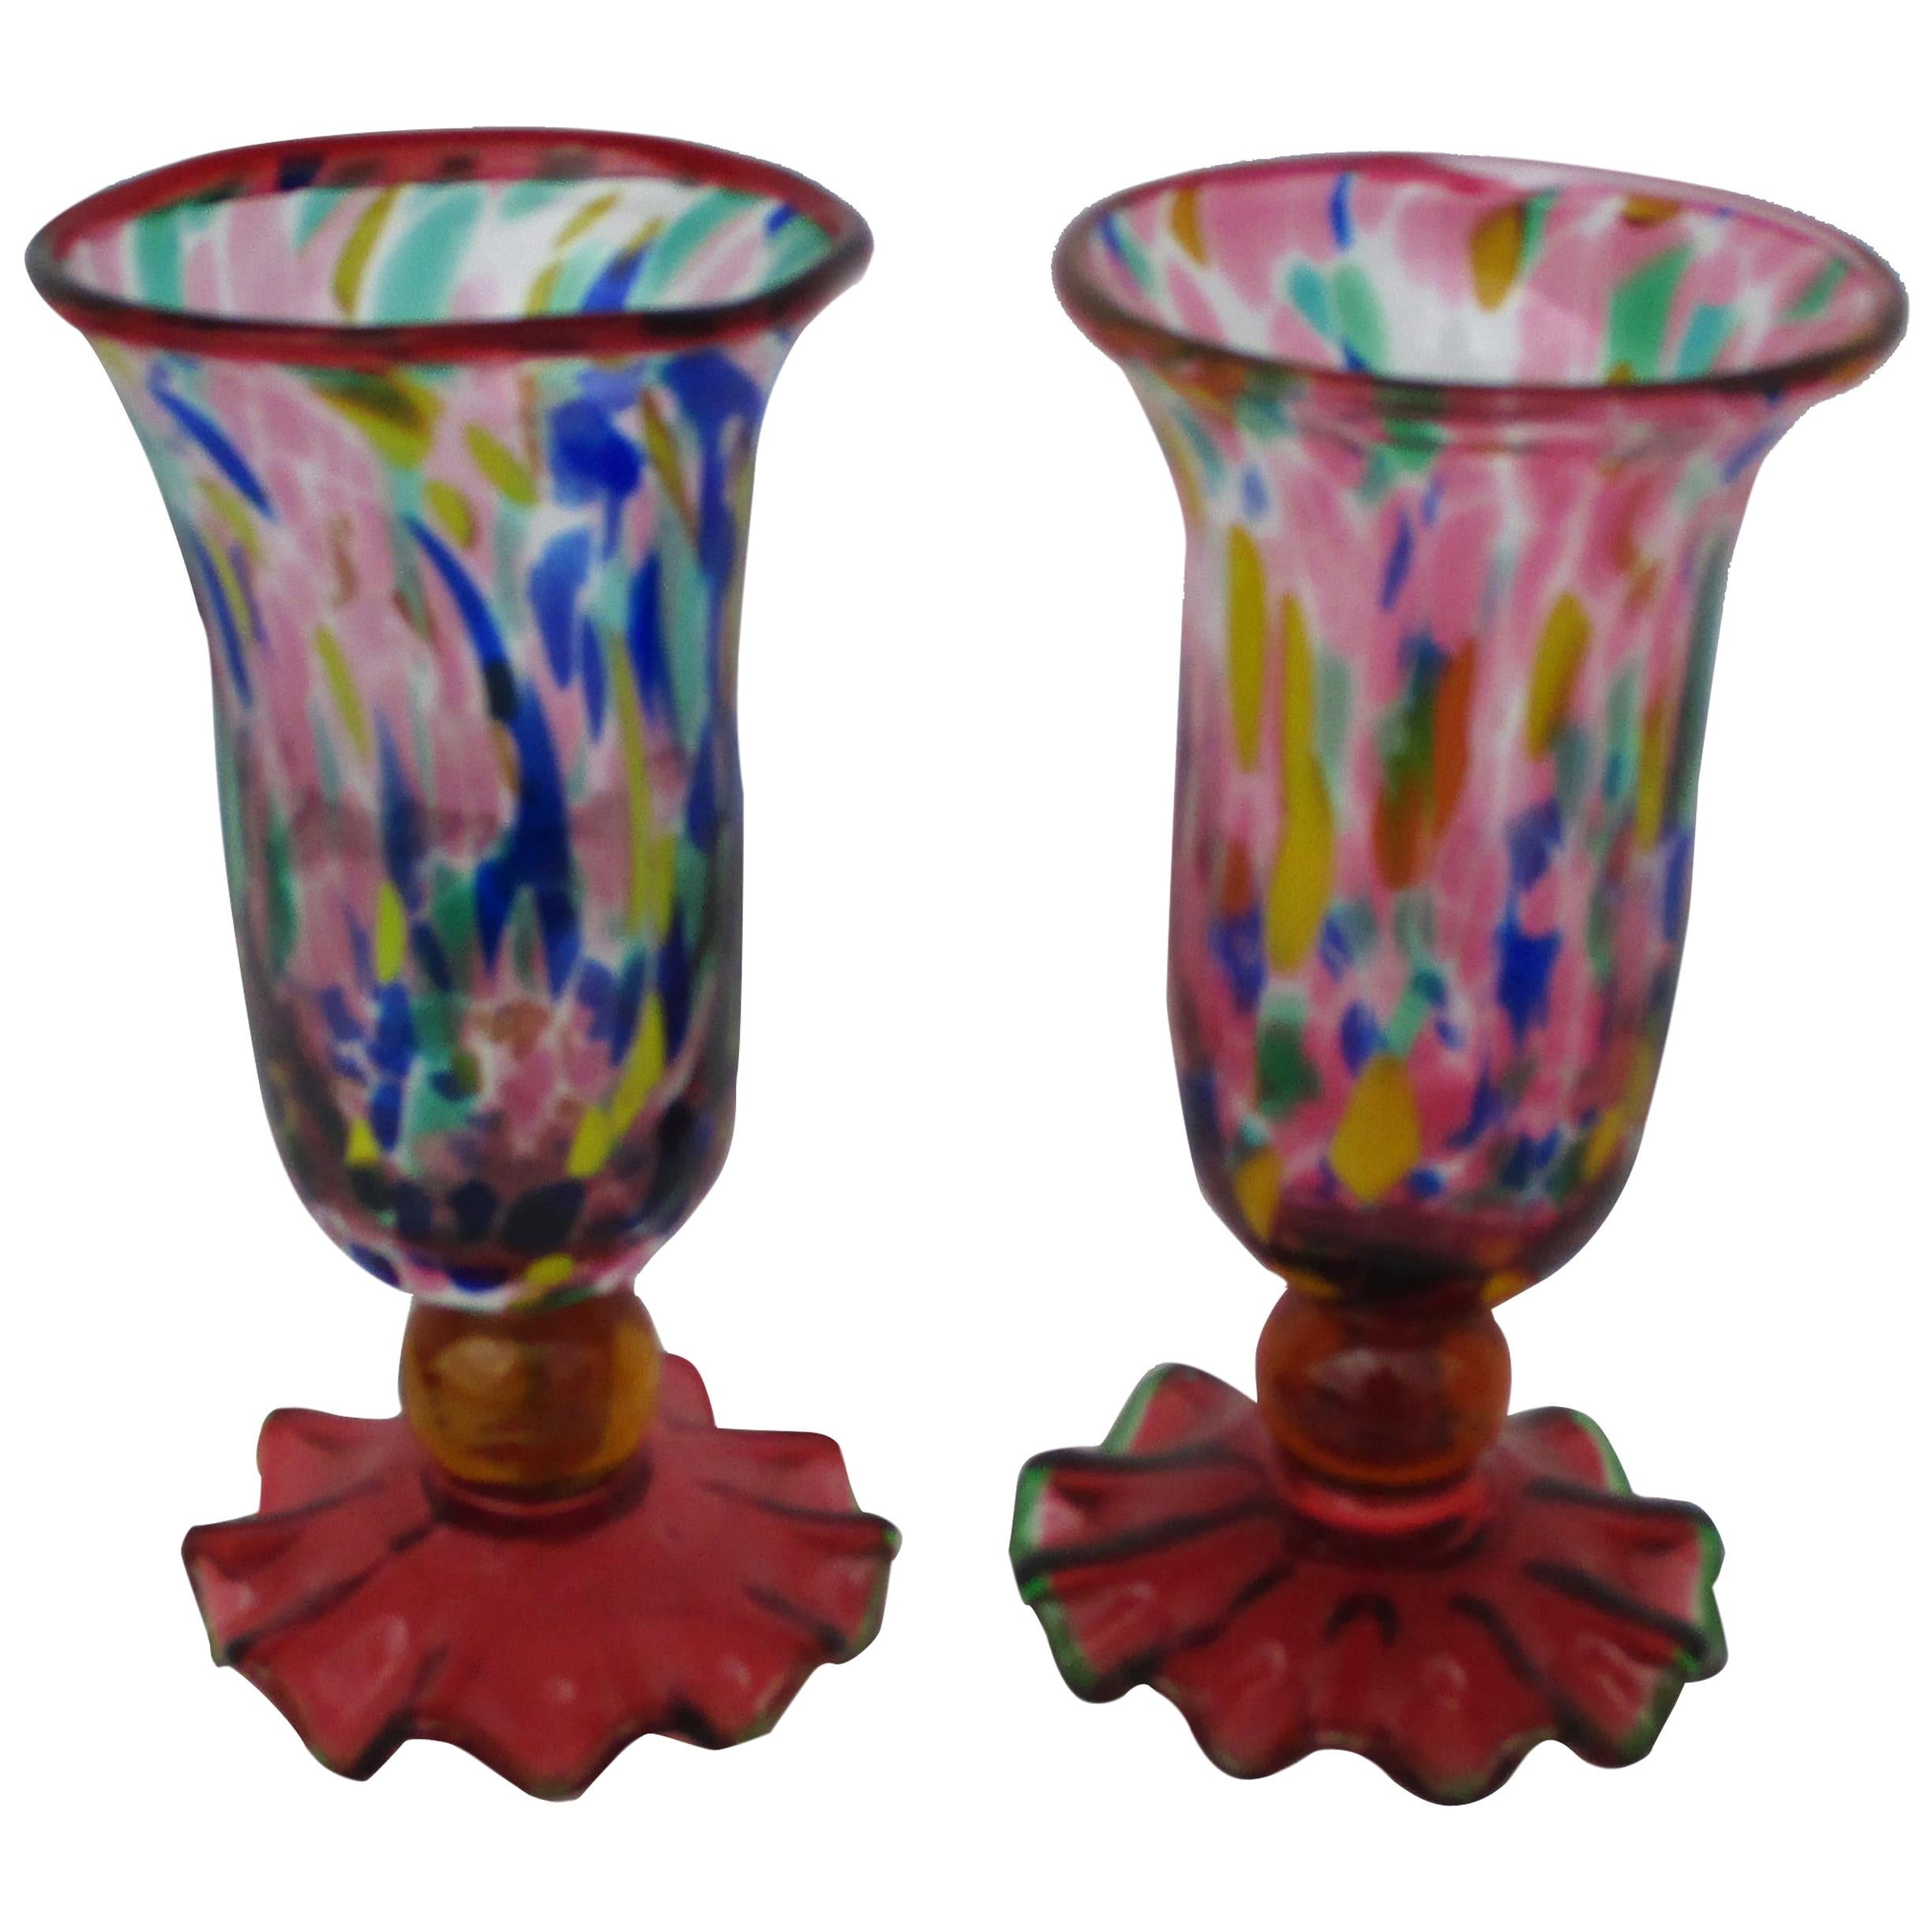 Pair of Multicolored Murano Goblets/Glasses with "Fazzoletto" Base